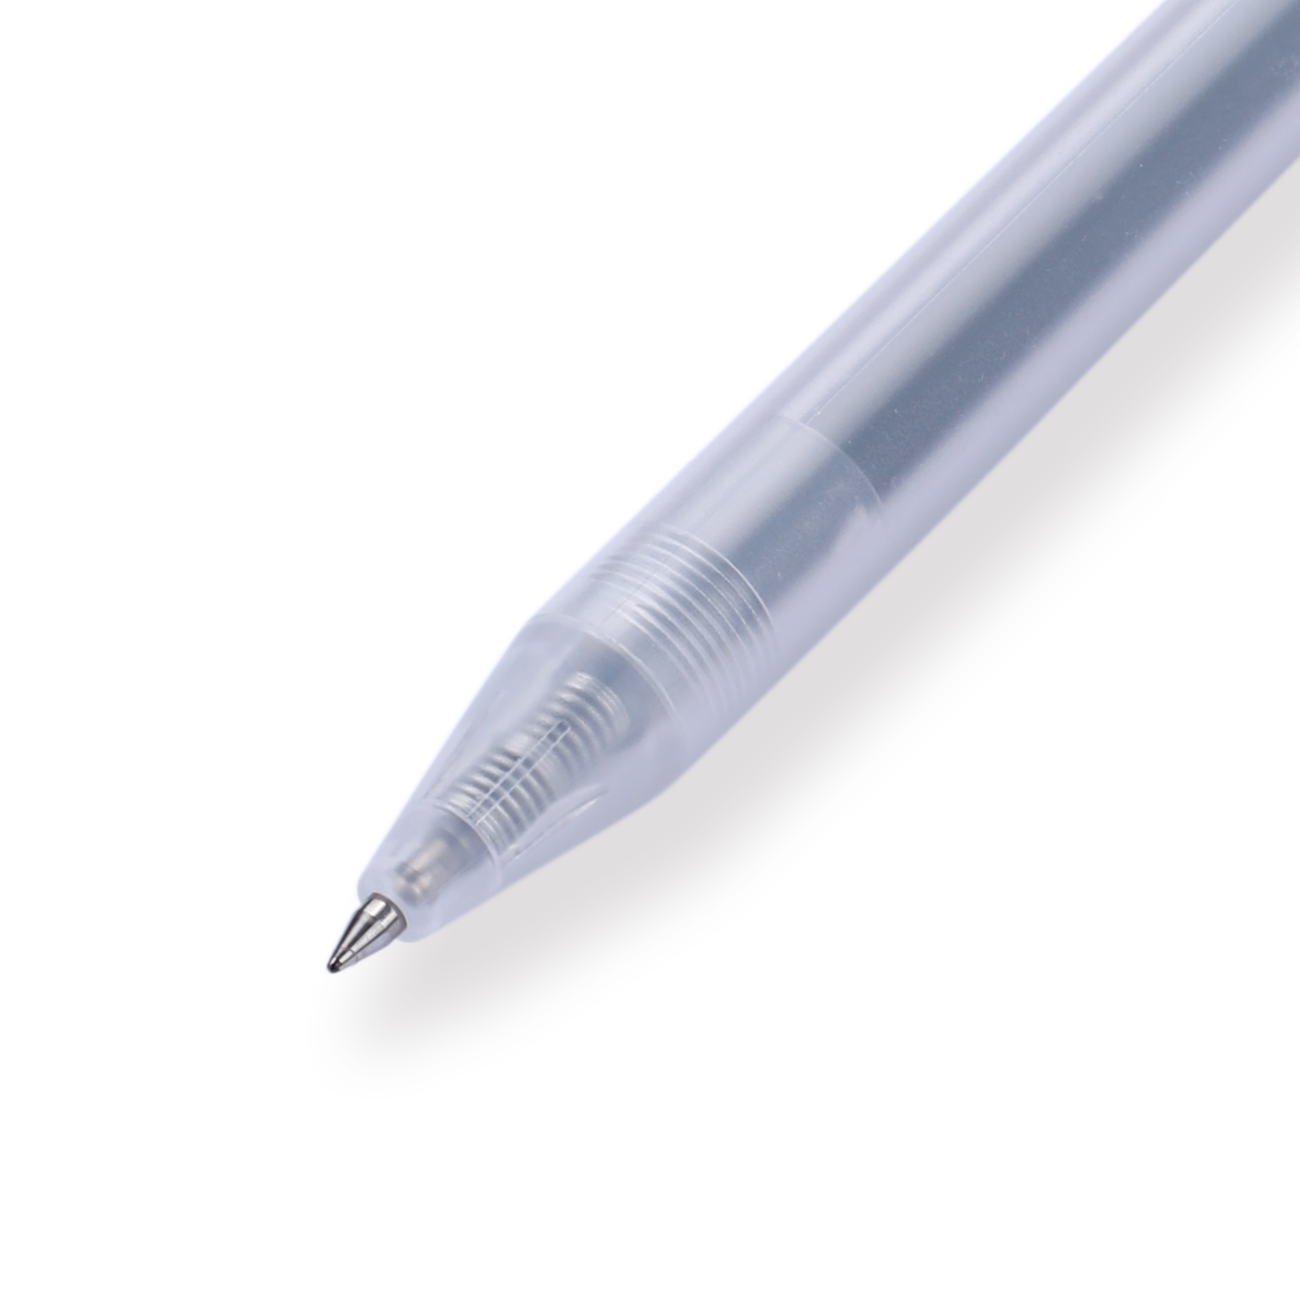 Wholesale - Pack of 10 - Muji Cap Type Gel Ink Pen - 0.5 mm